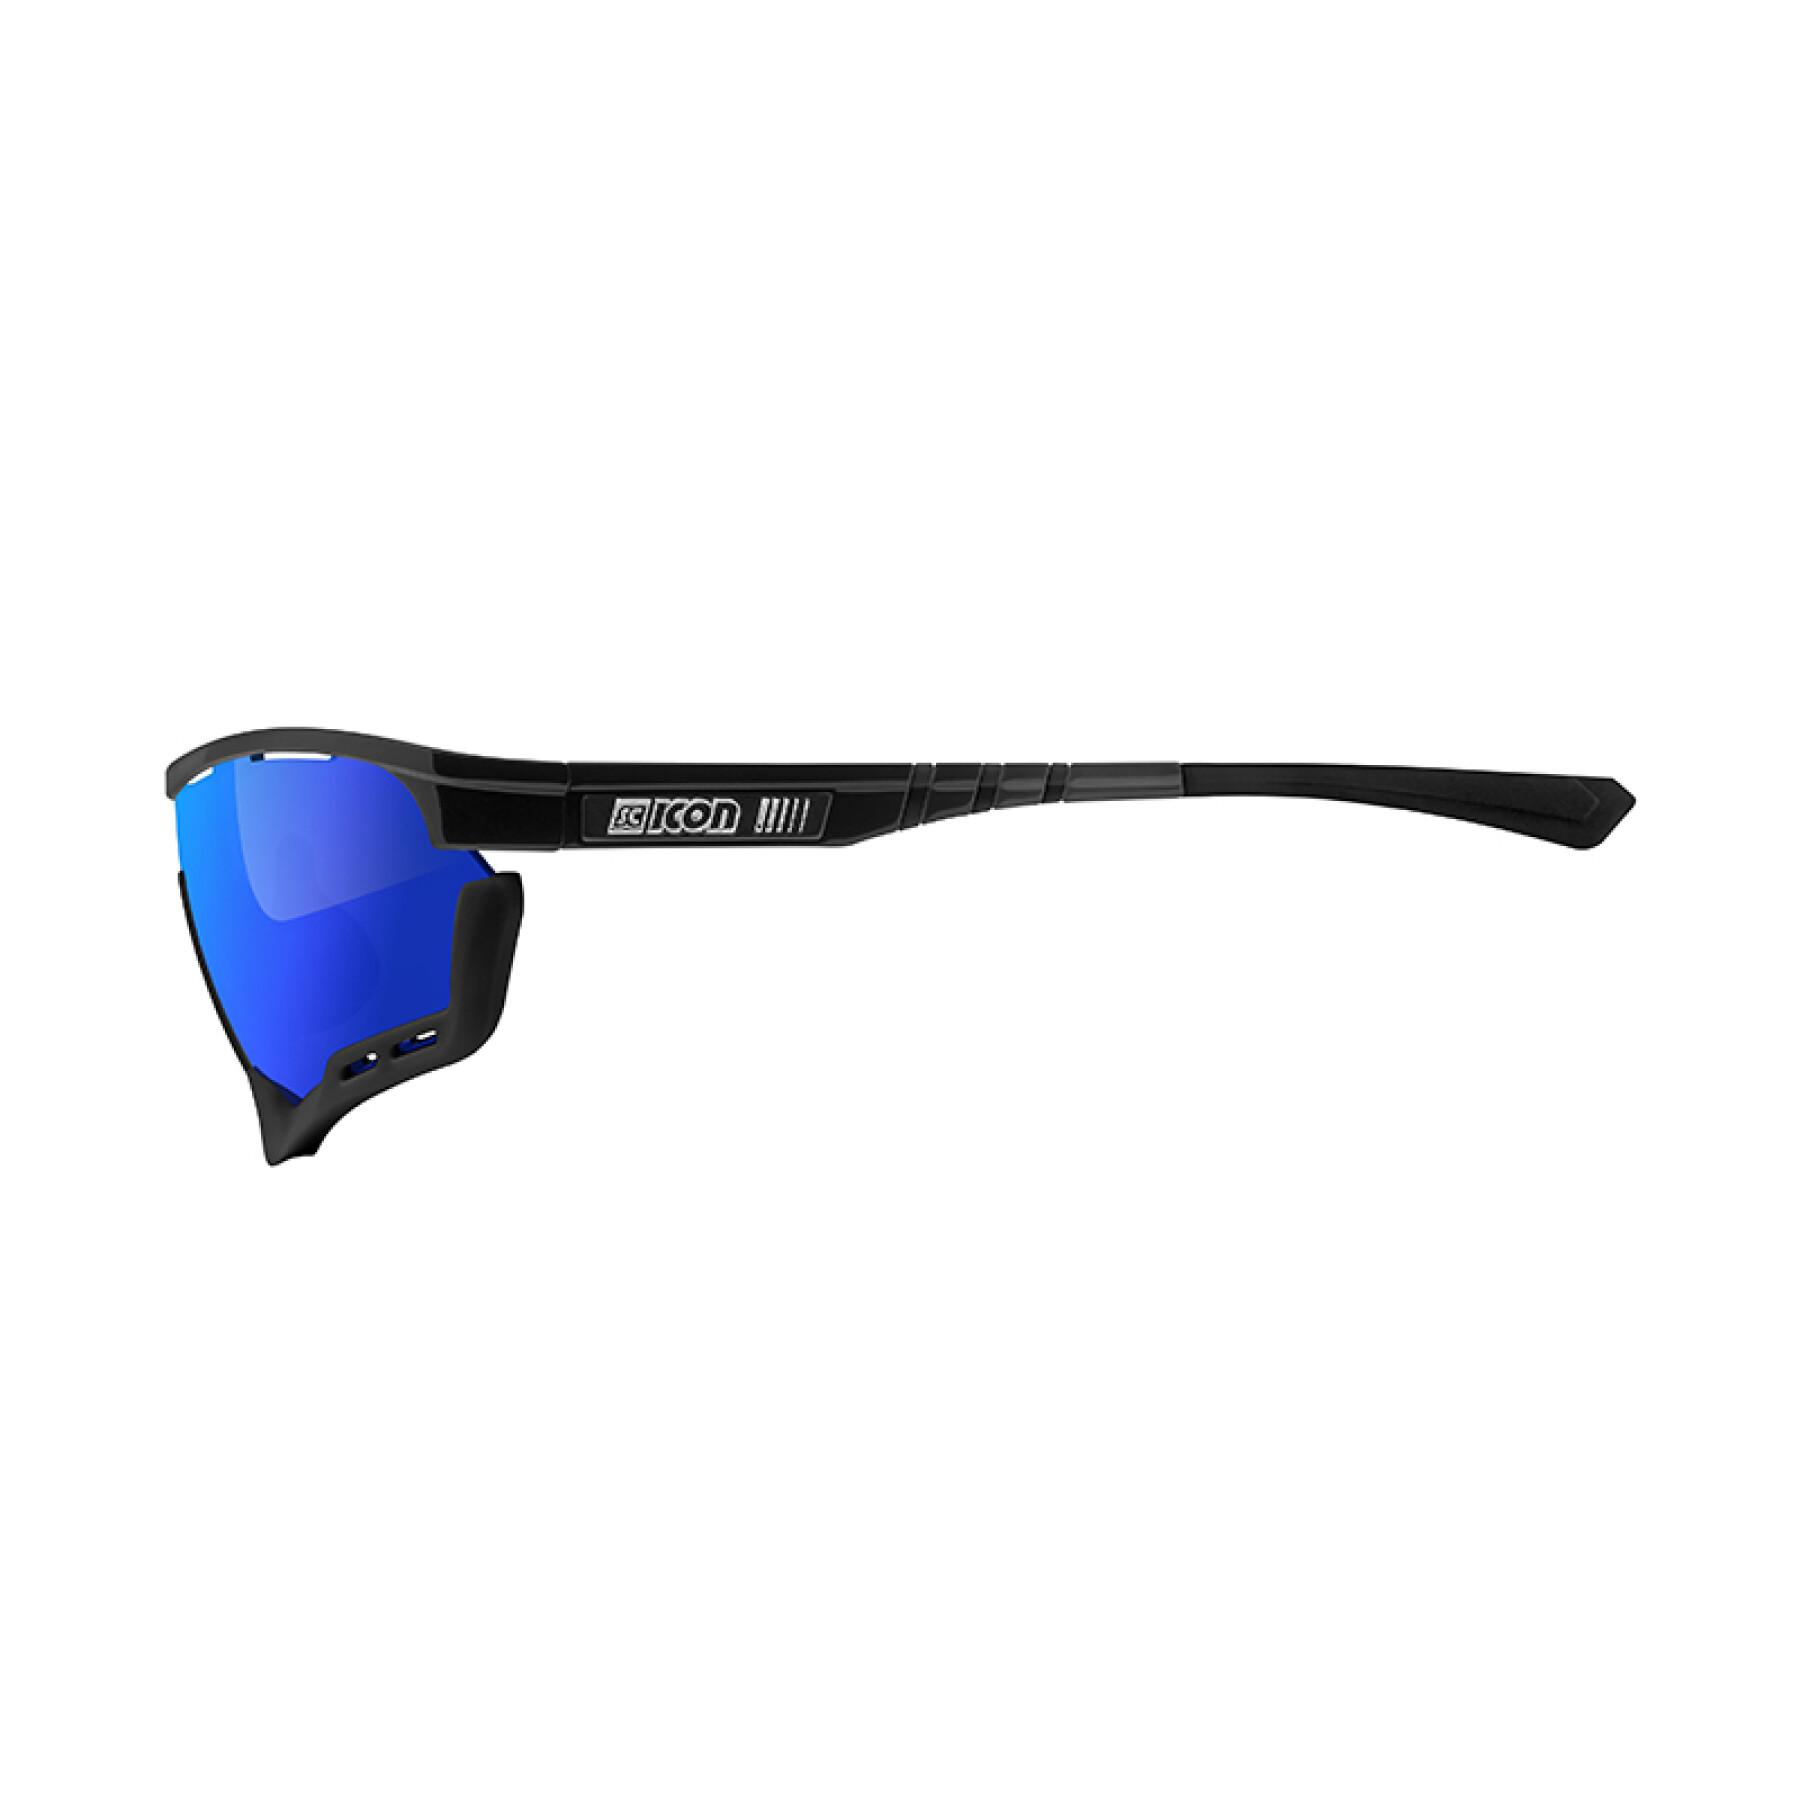 Gafas Scicon aerotech scnpp verre multi-reflet bleues